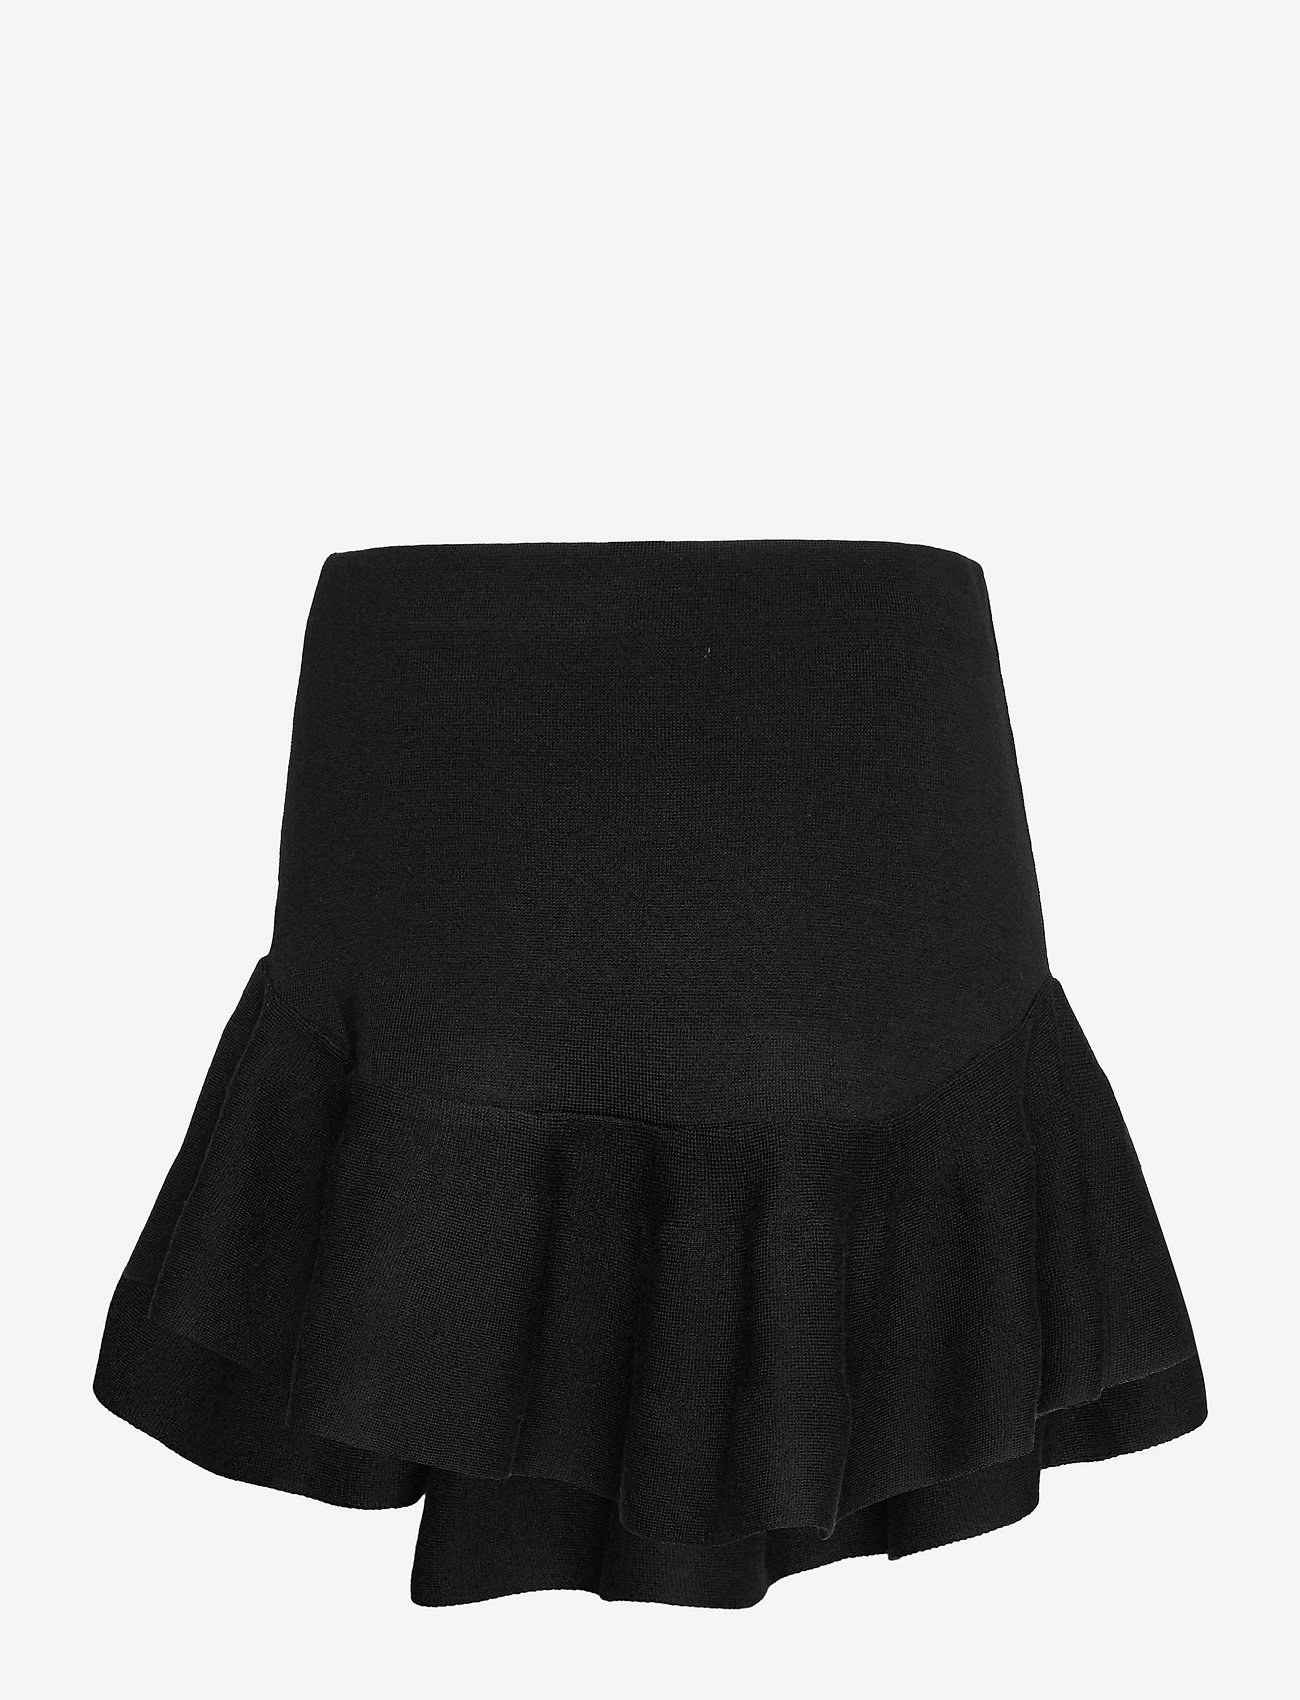 ella&il - Karen merino skirt - short skirts - black - 1